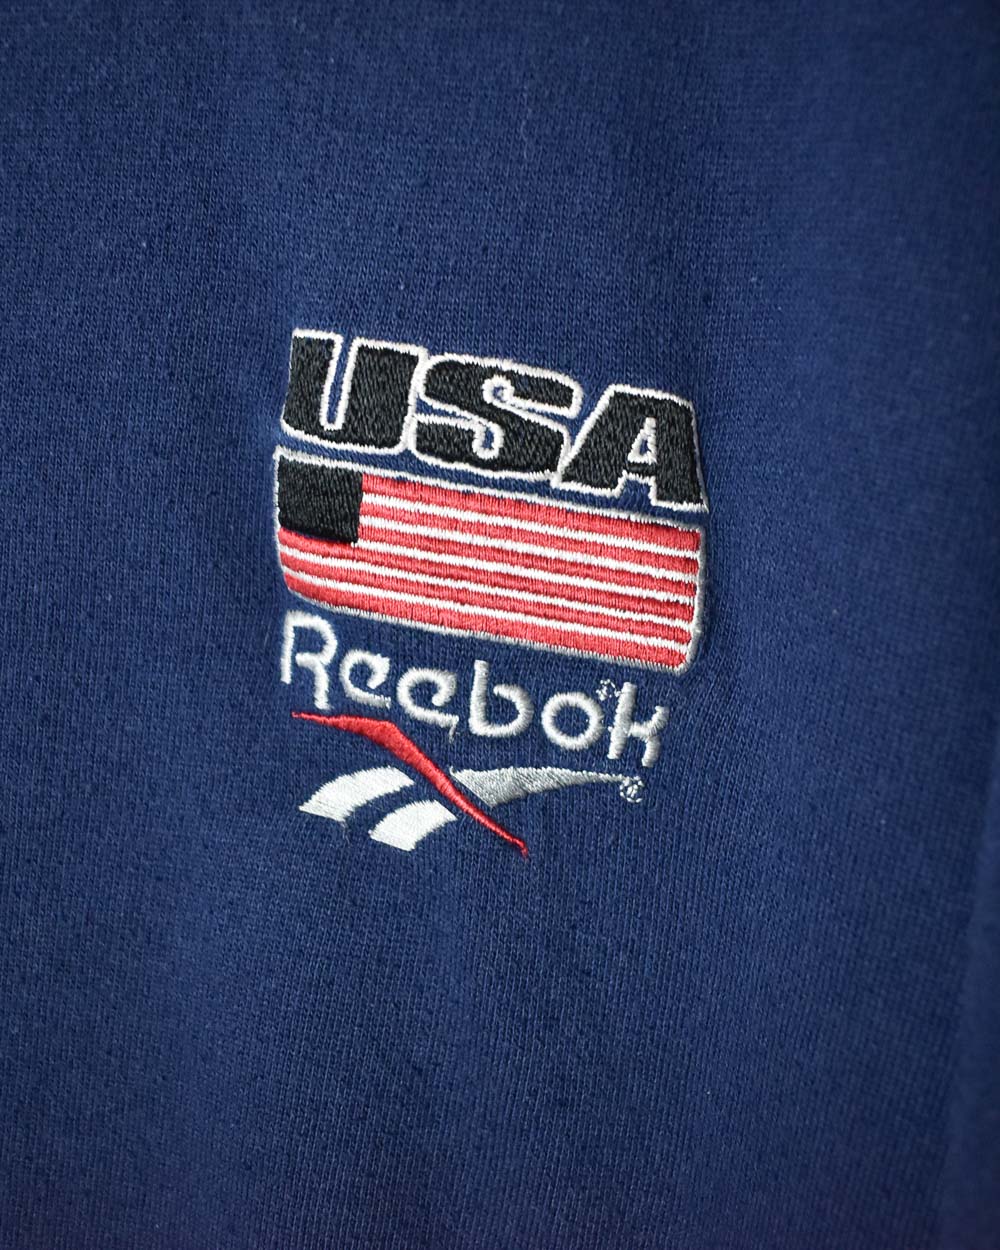 Navy Reebok USA Sweatshirt - Medium